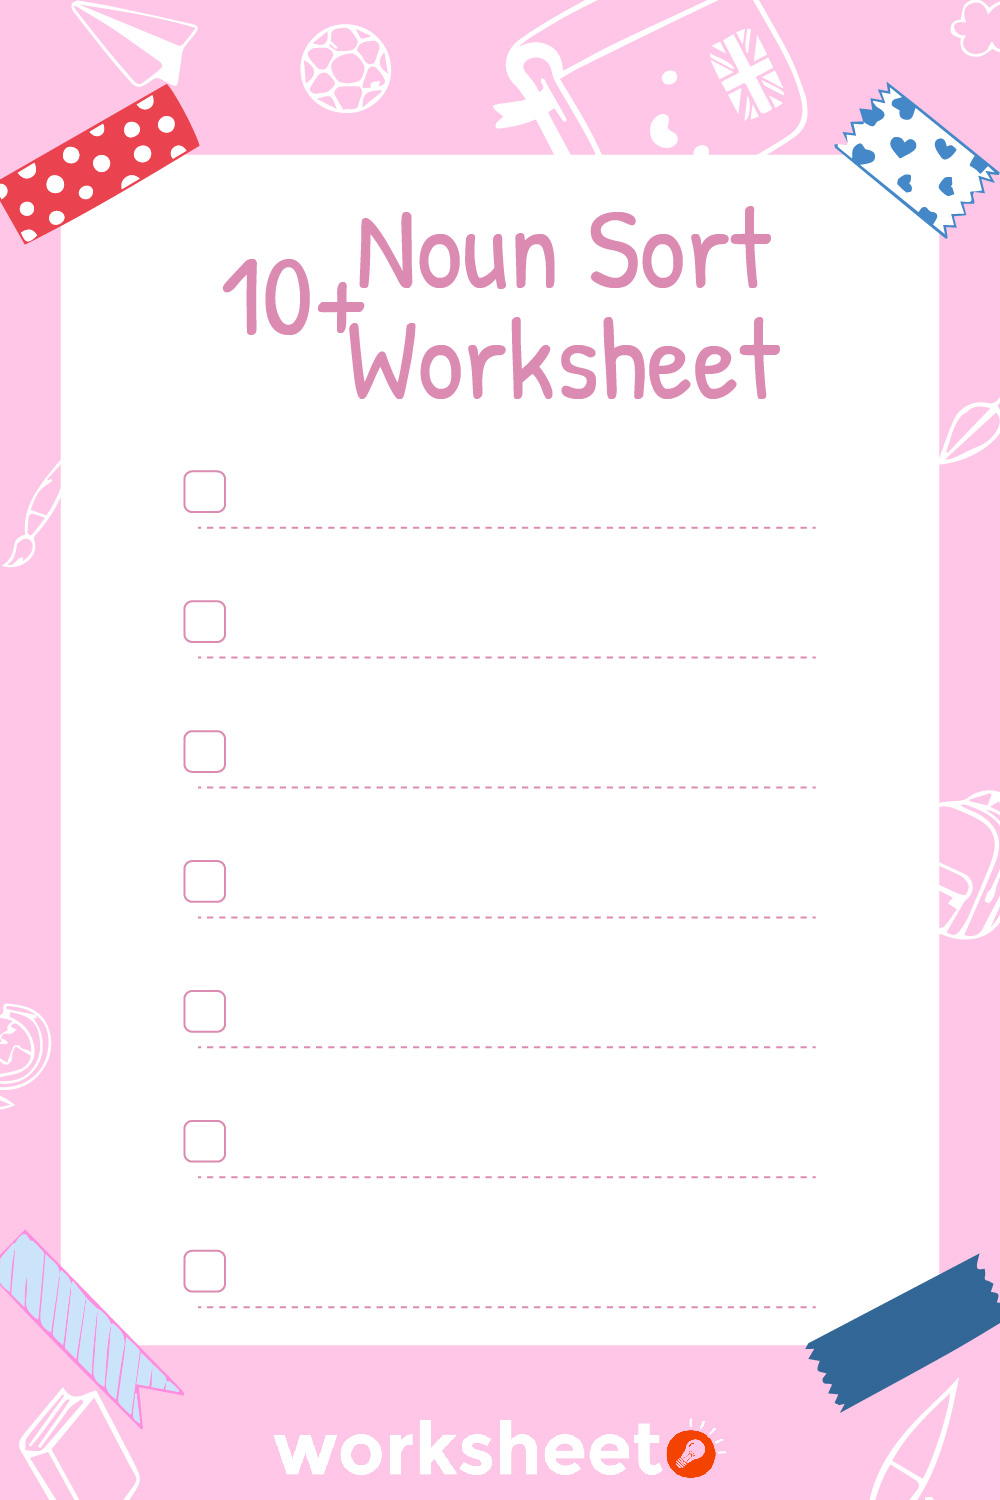 17 Images of Noun Sort Worksheet